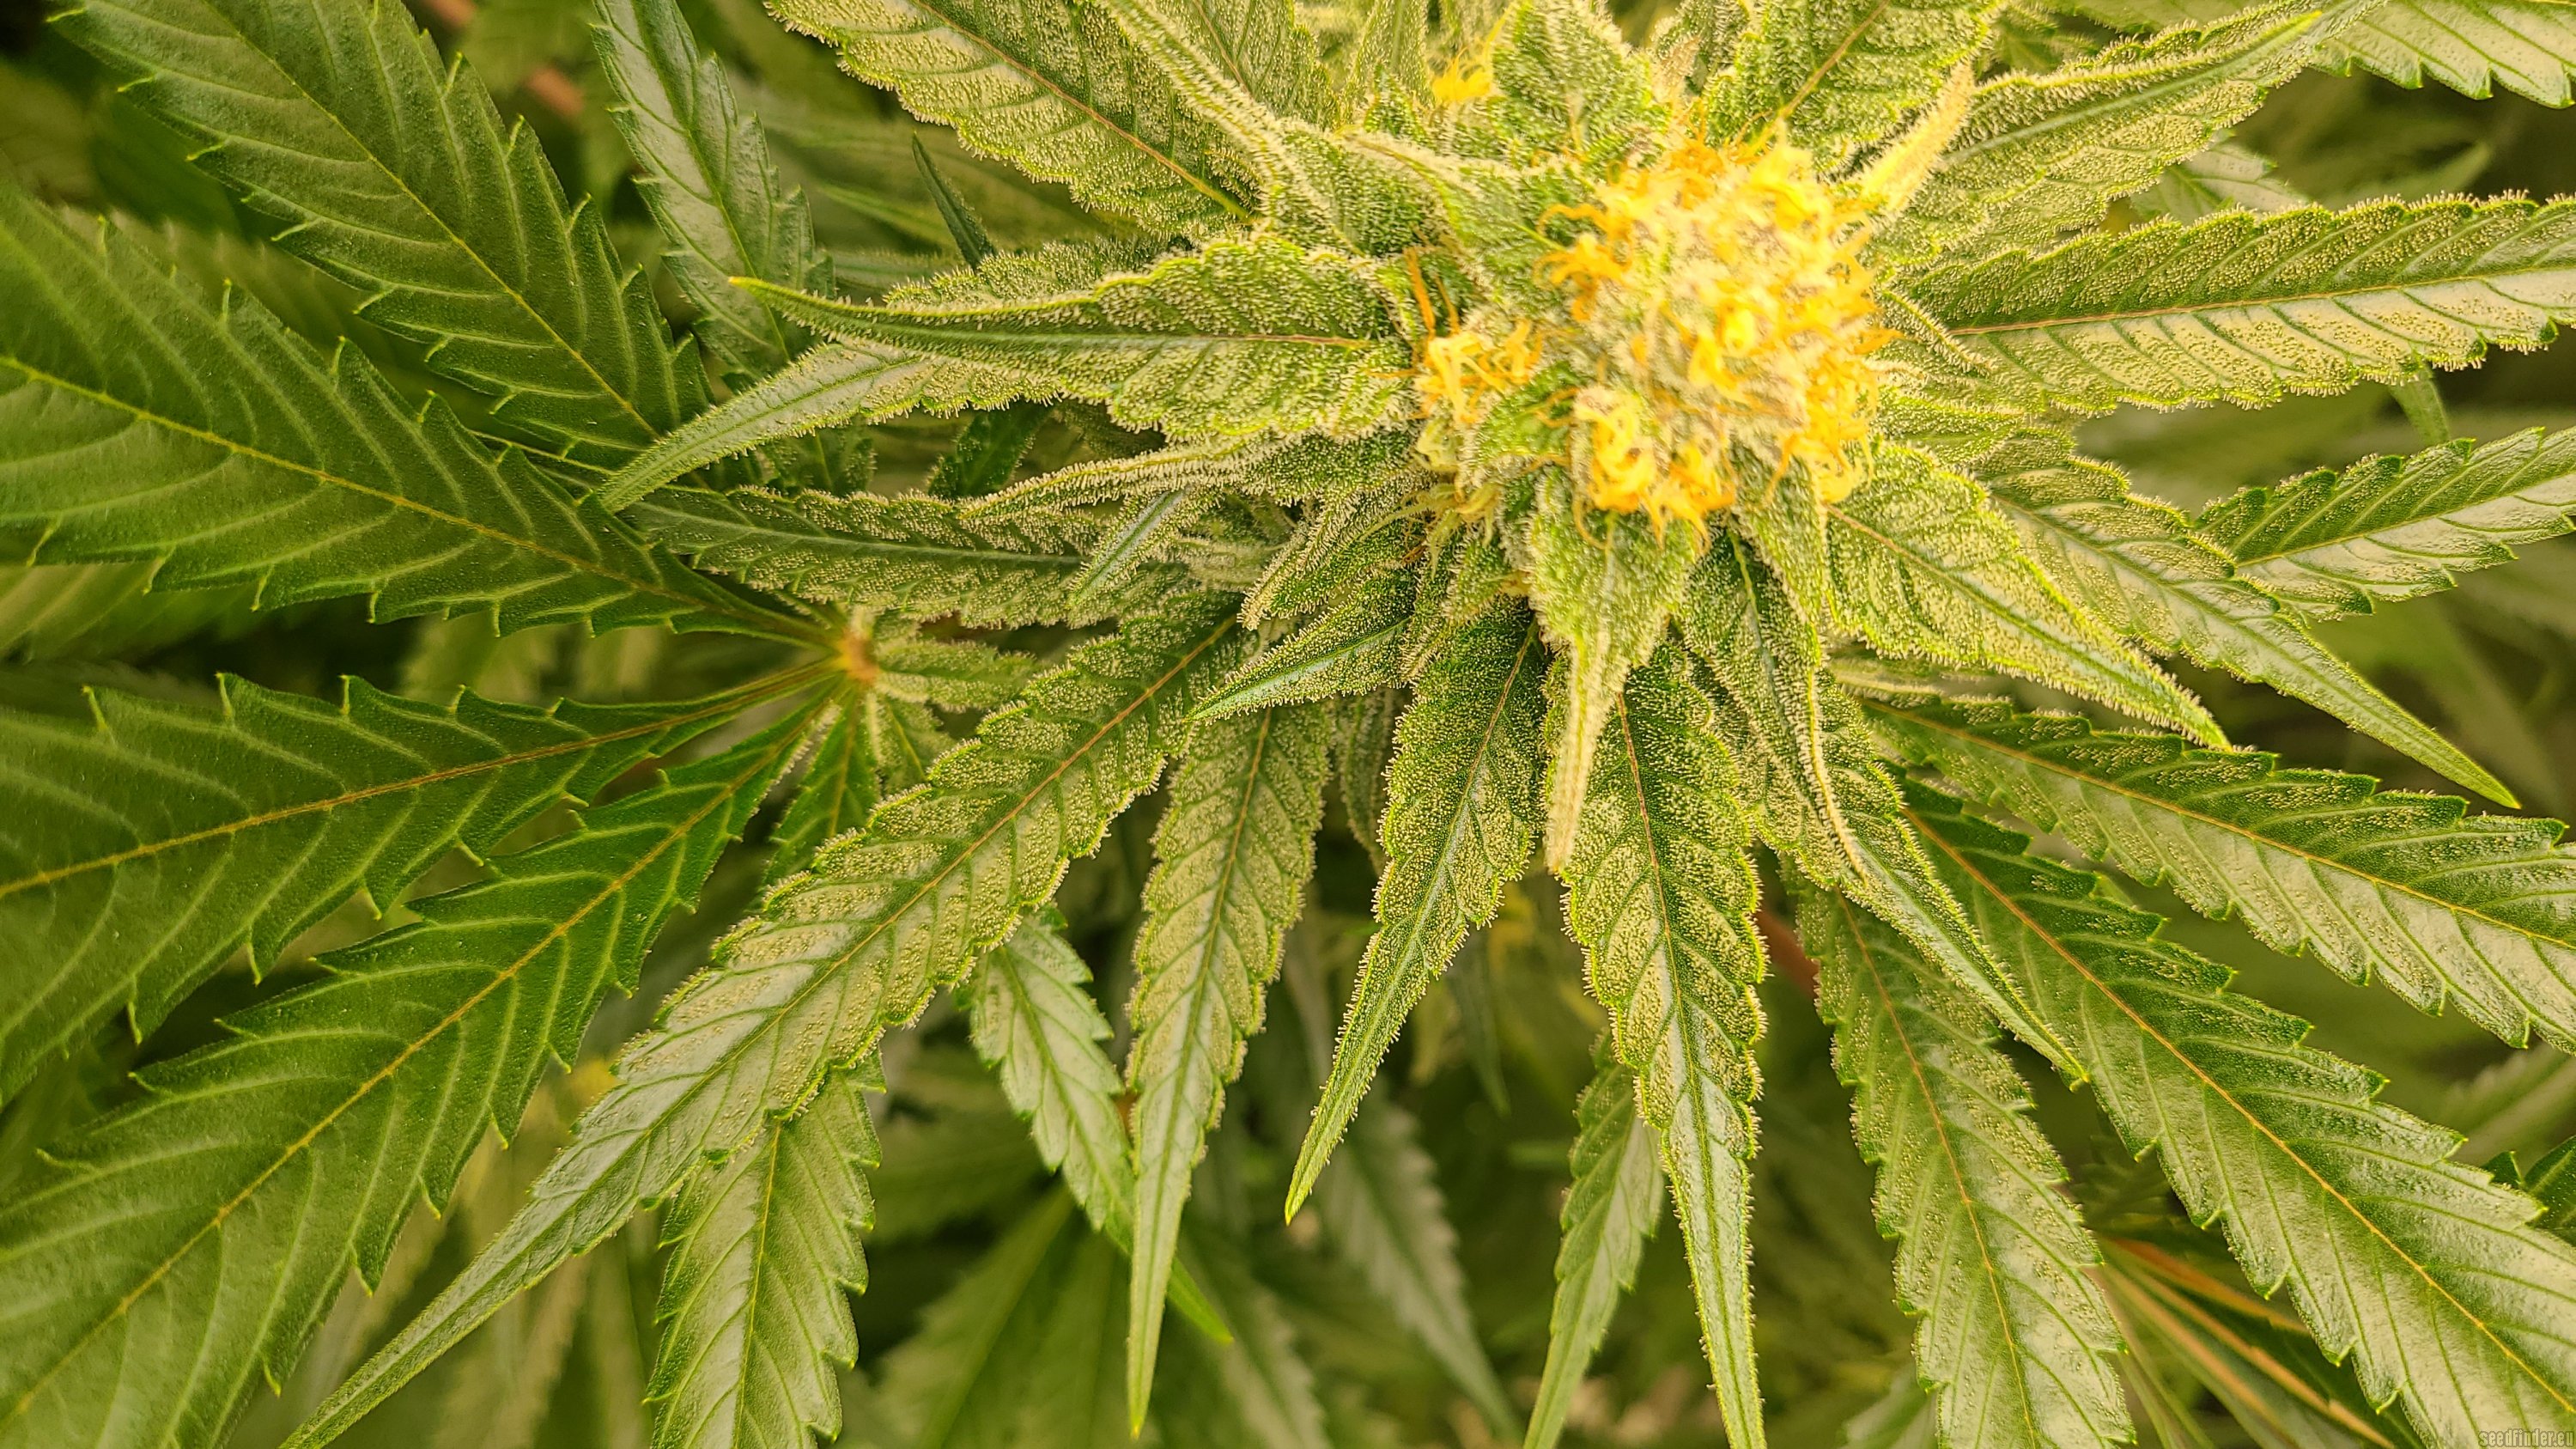 Pineapple Express (G13 Labs) :: Cannabis Strain Info